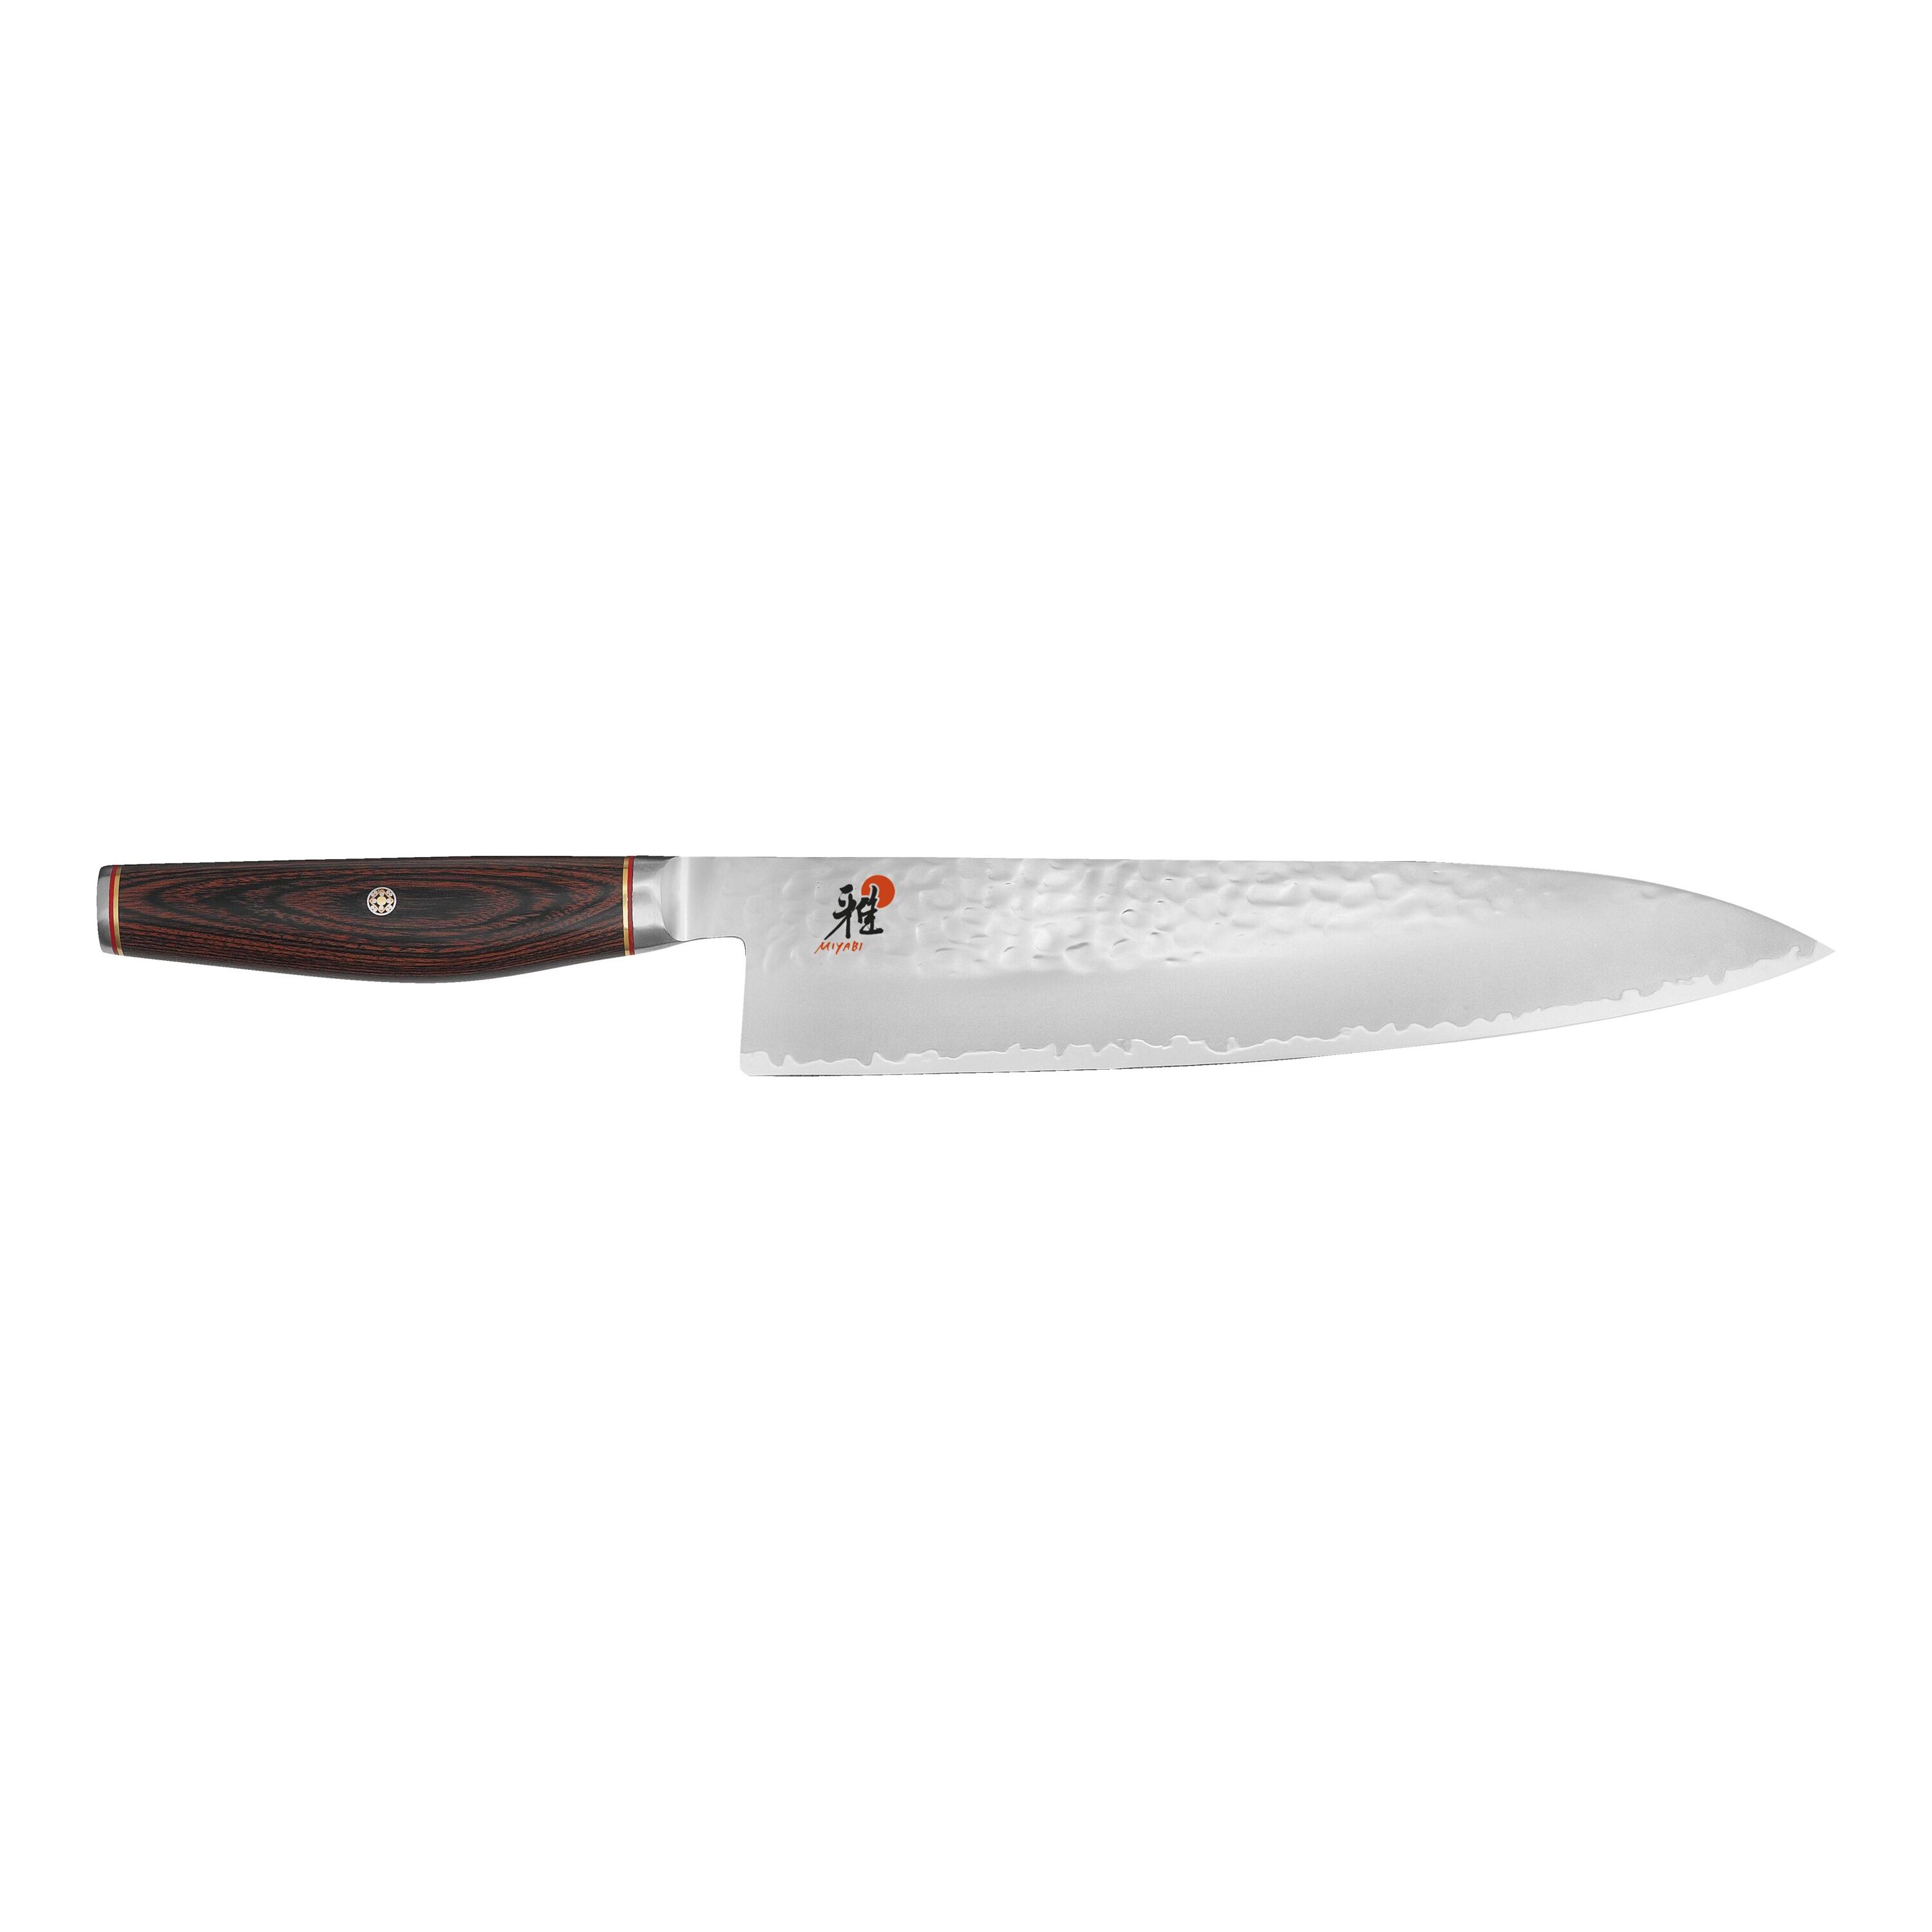 Miyabi Black Damascus Steel Knife Collection, 6 Size Options